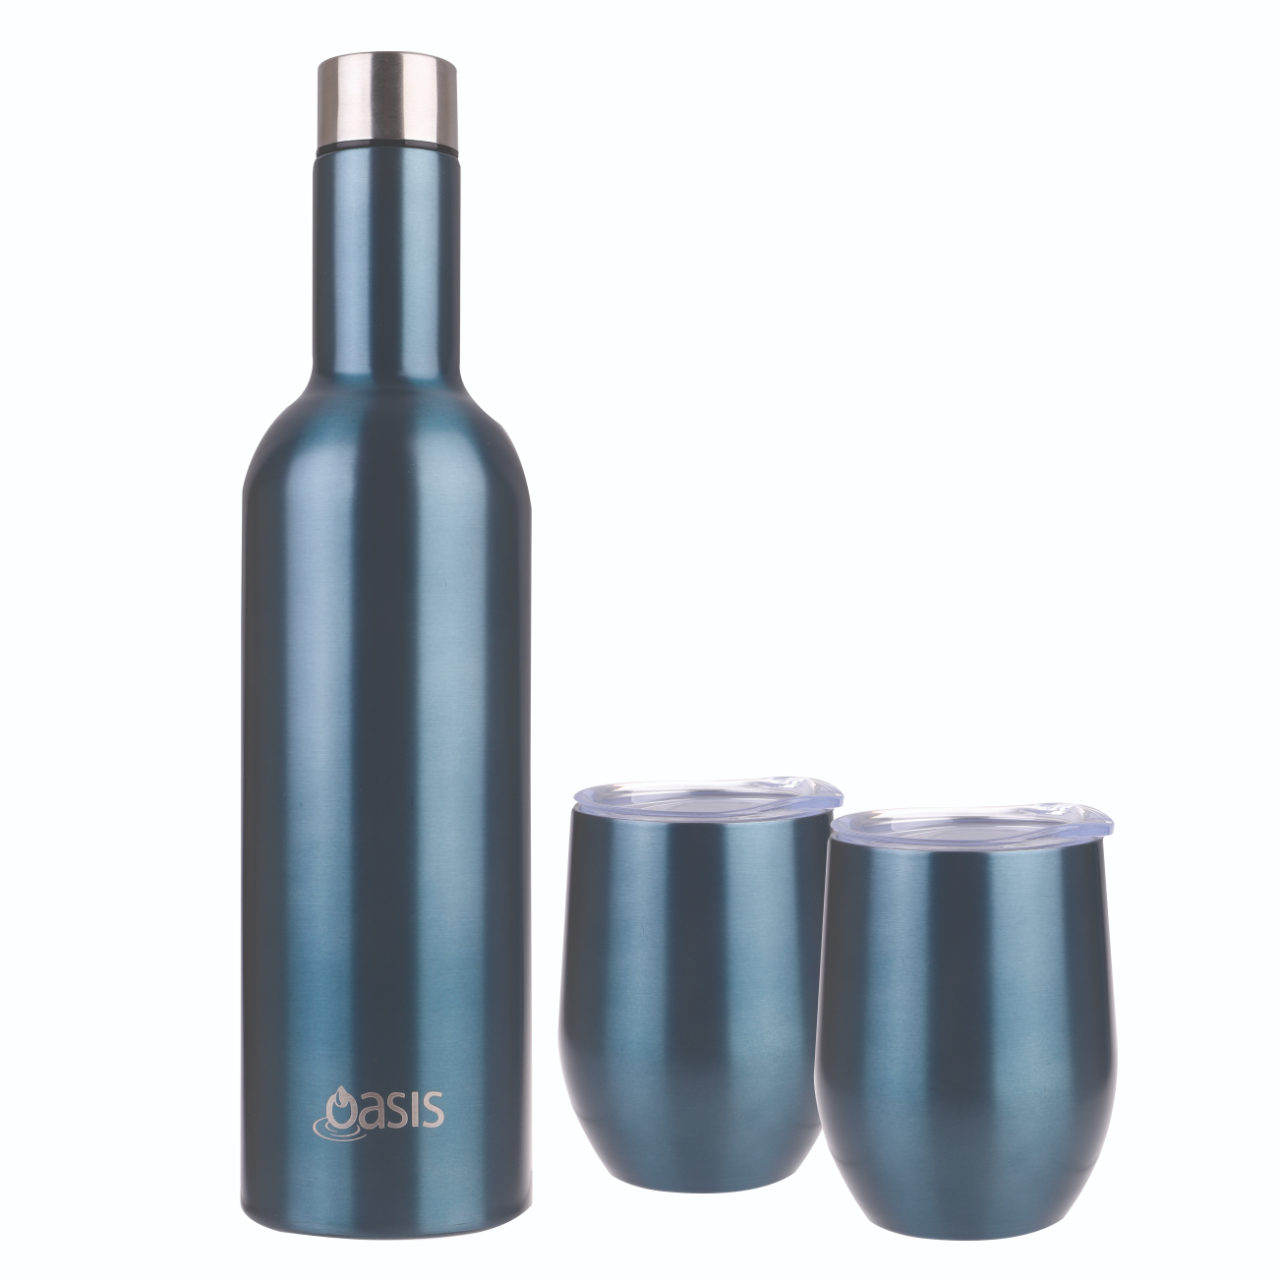 OASIS Wine Gift S3 Sapphire